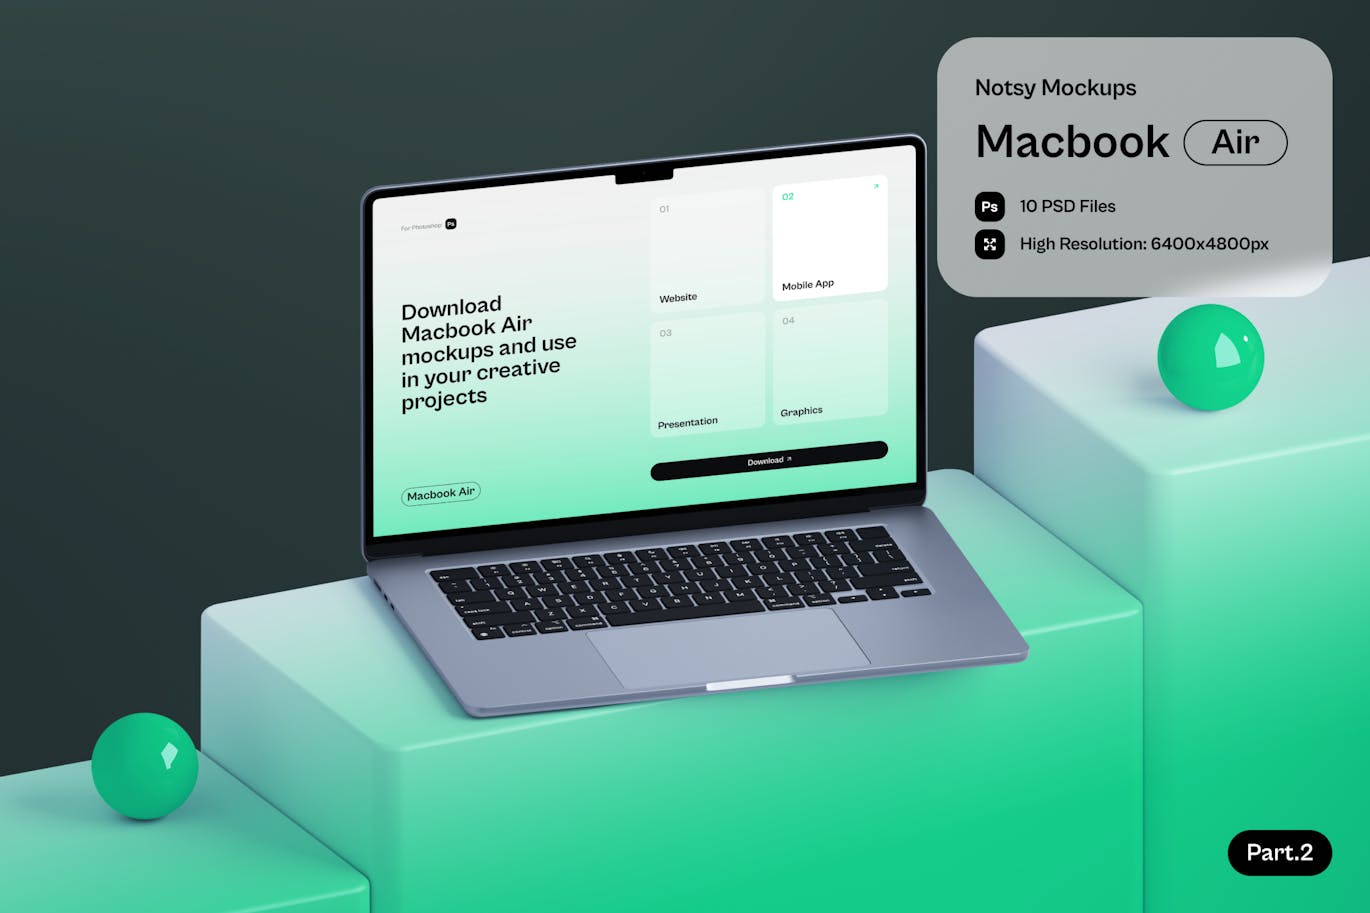 Macbook Air 模型样机第 2 部分 (PSD,PNG)